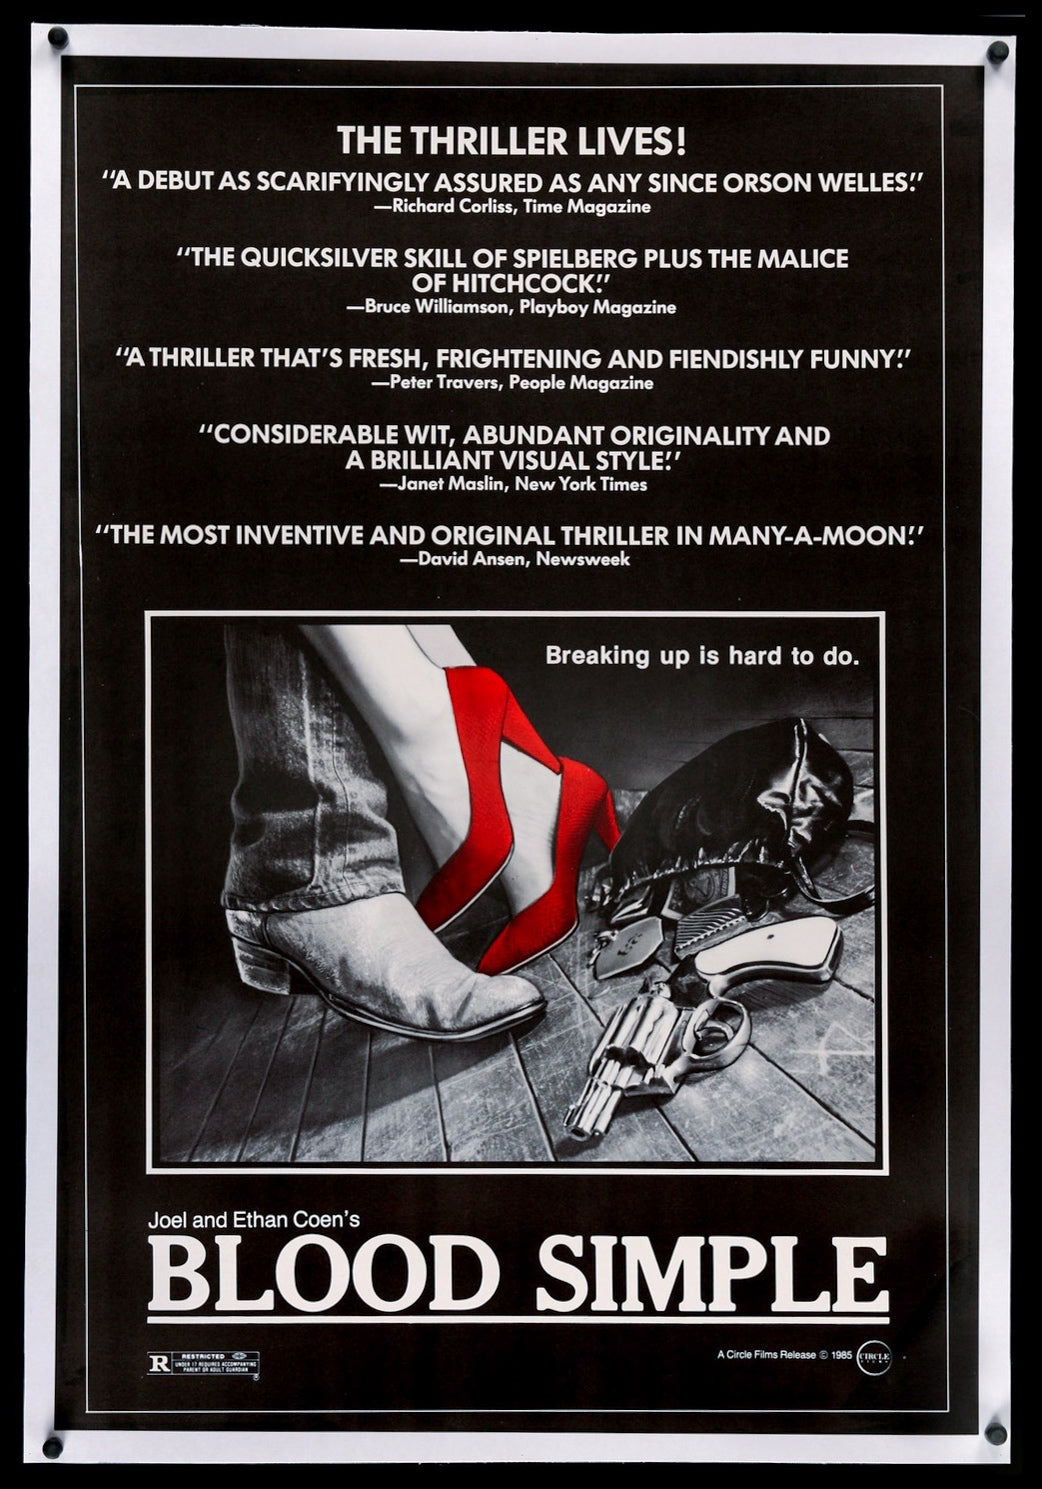 Blood Simple (1984) original movie poster for sale at Original Film Art